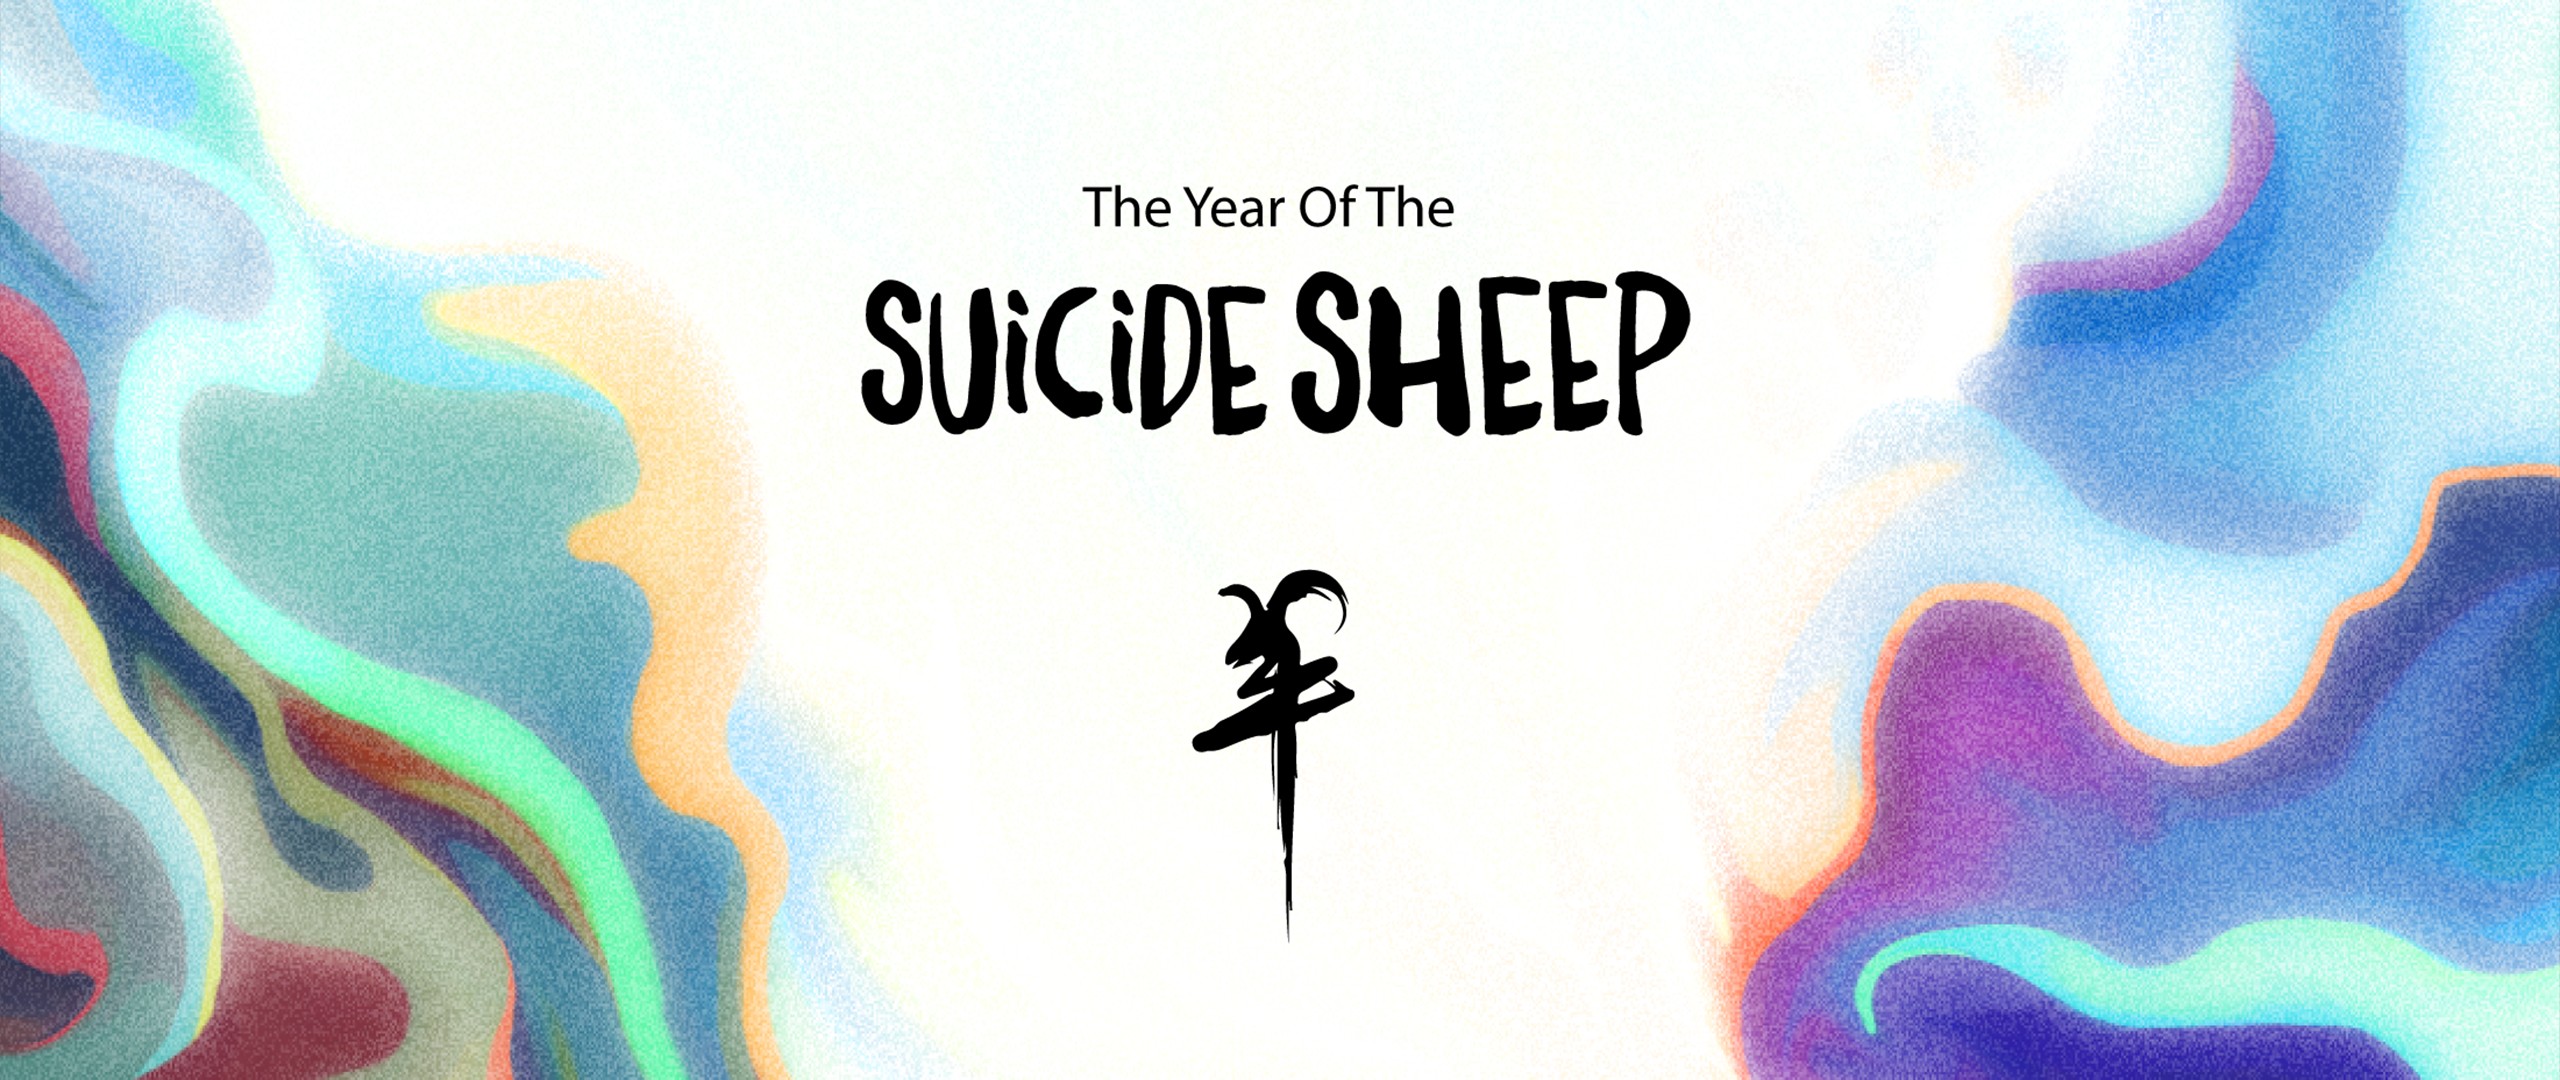 ultra wide, Suicide Sheep Wallpaper